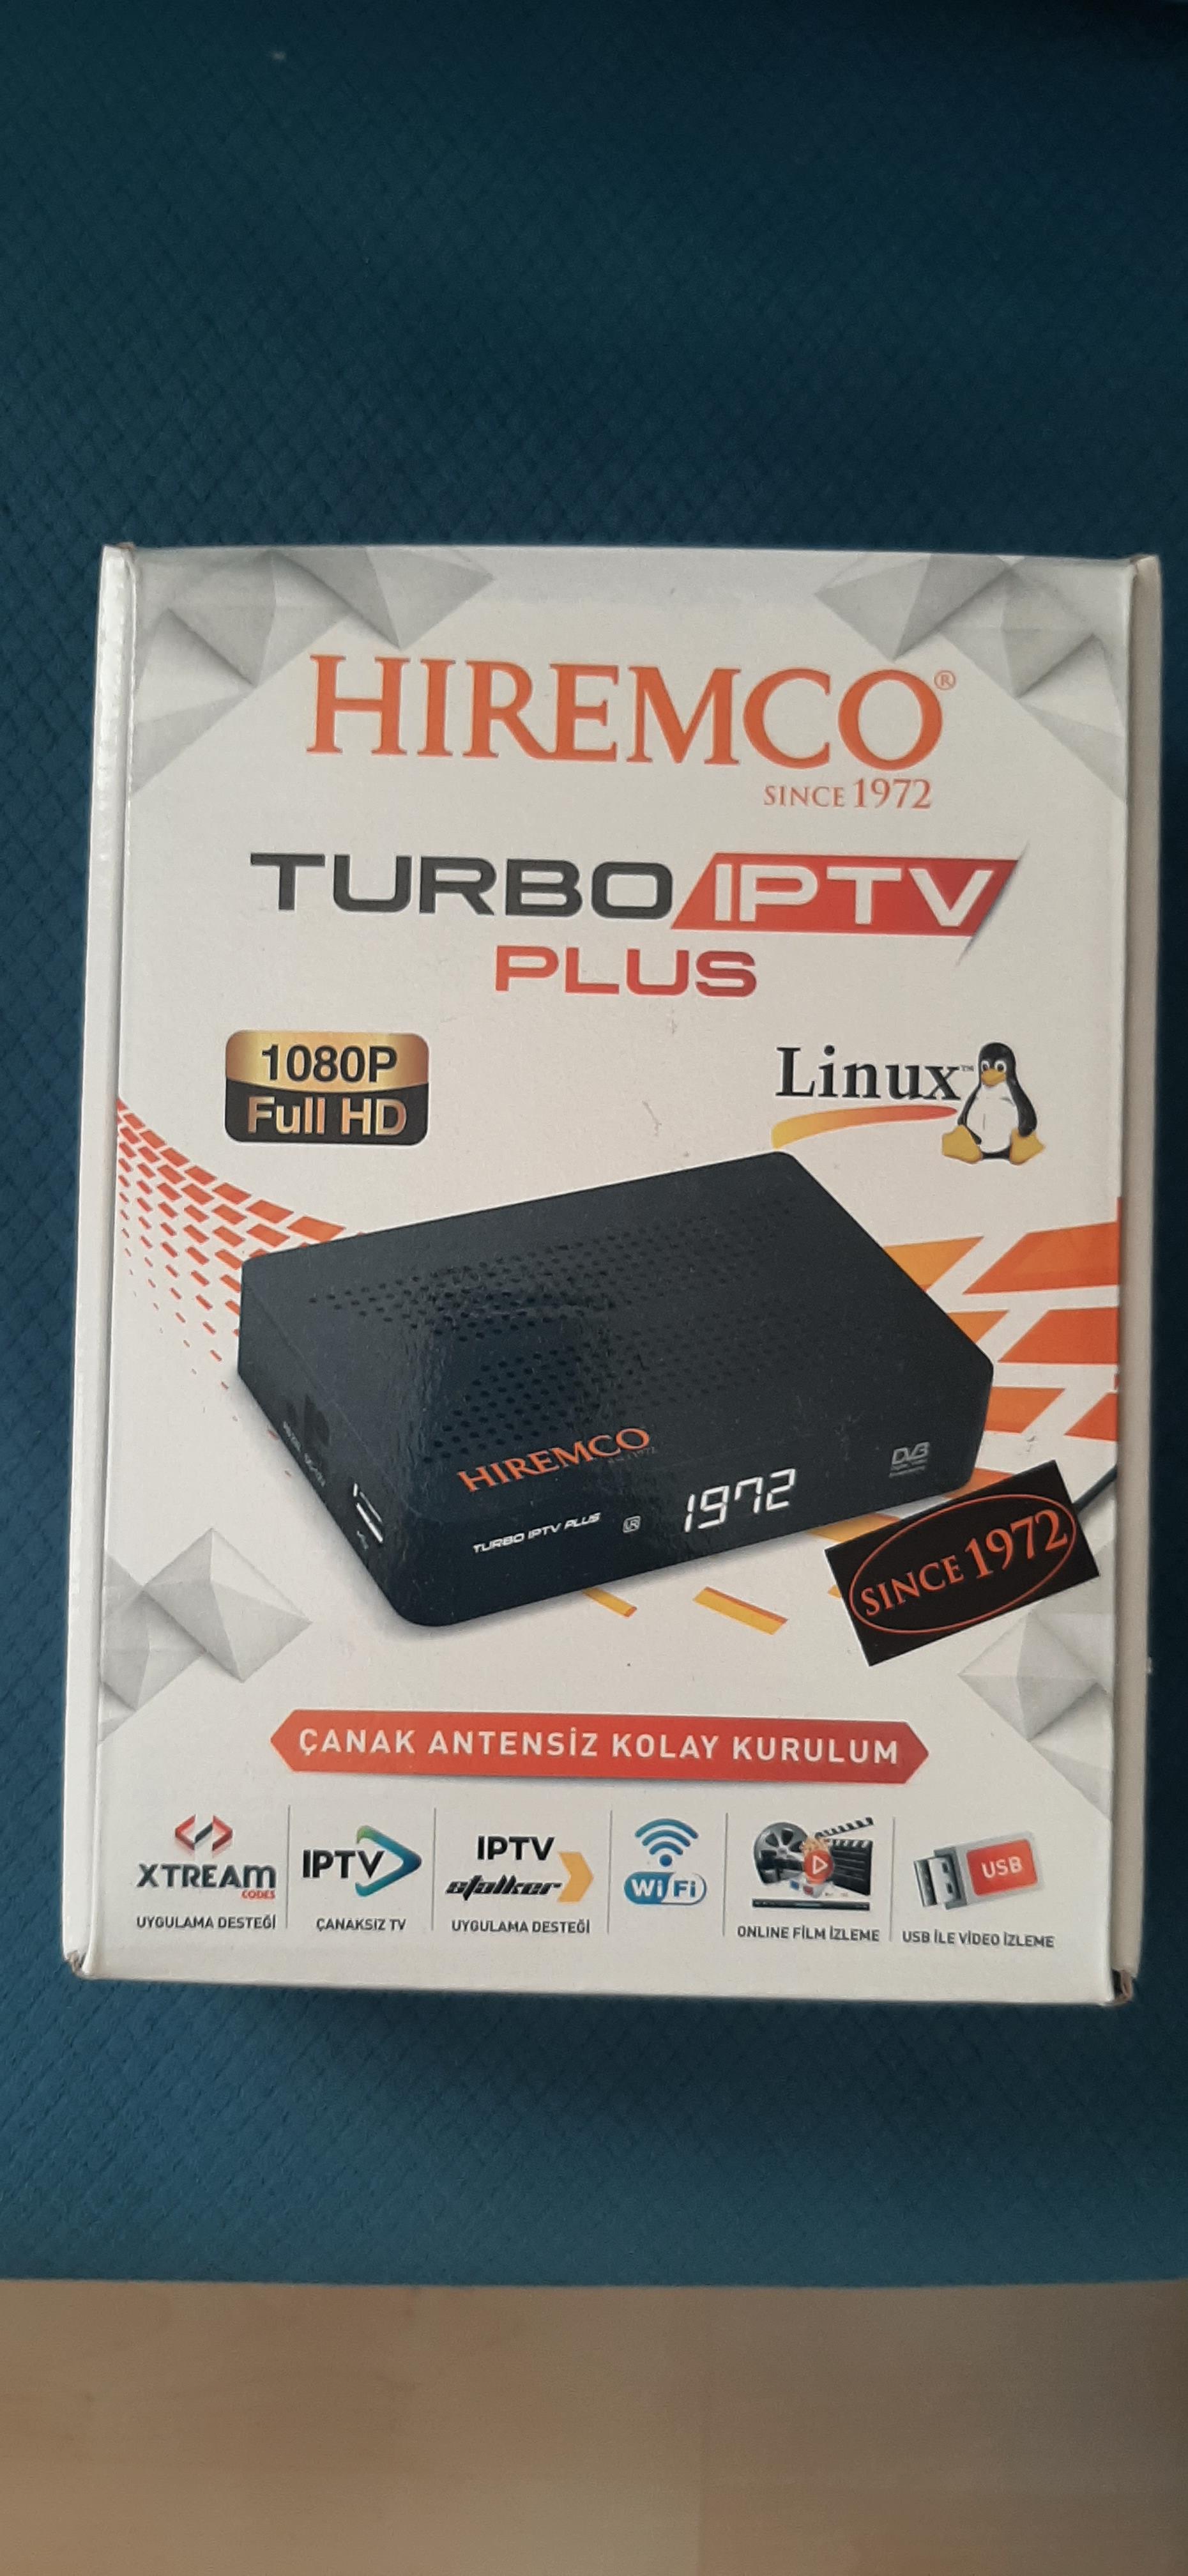 HIREMCO Turbo IPTV PLUS HD Uydu Alıcısı TURBO-IPTV-PLUS | DonanımHaber Forum